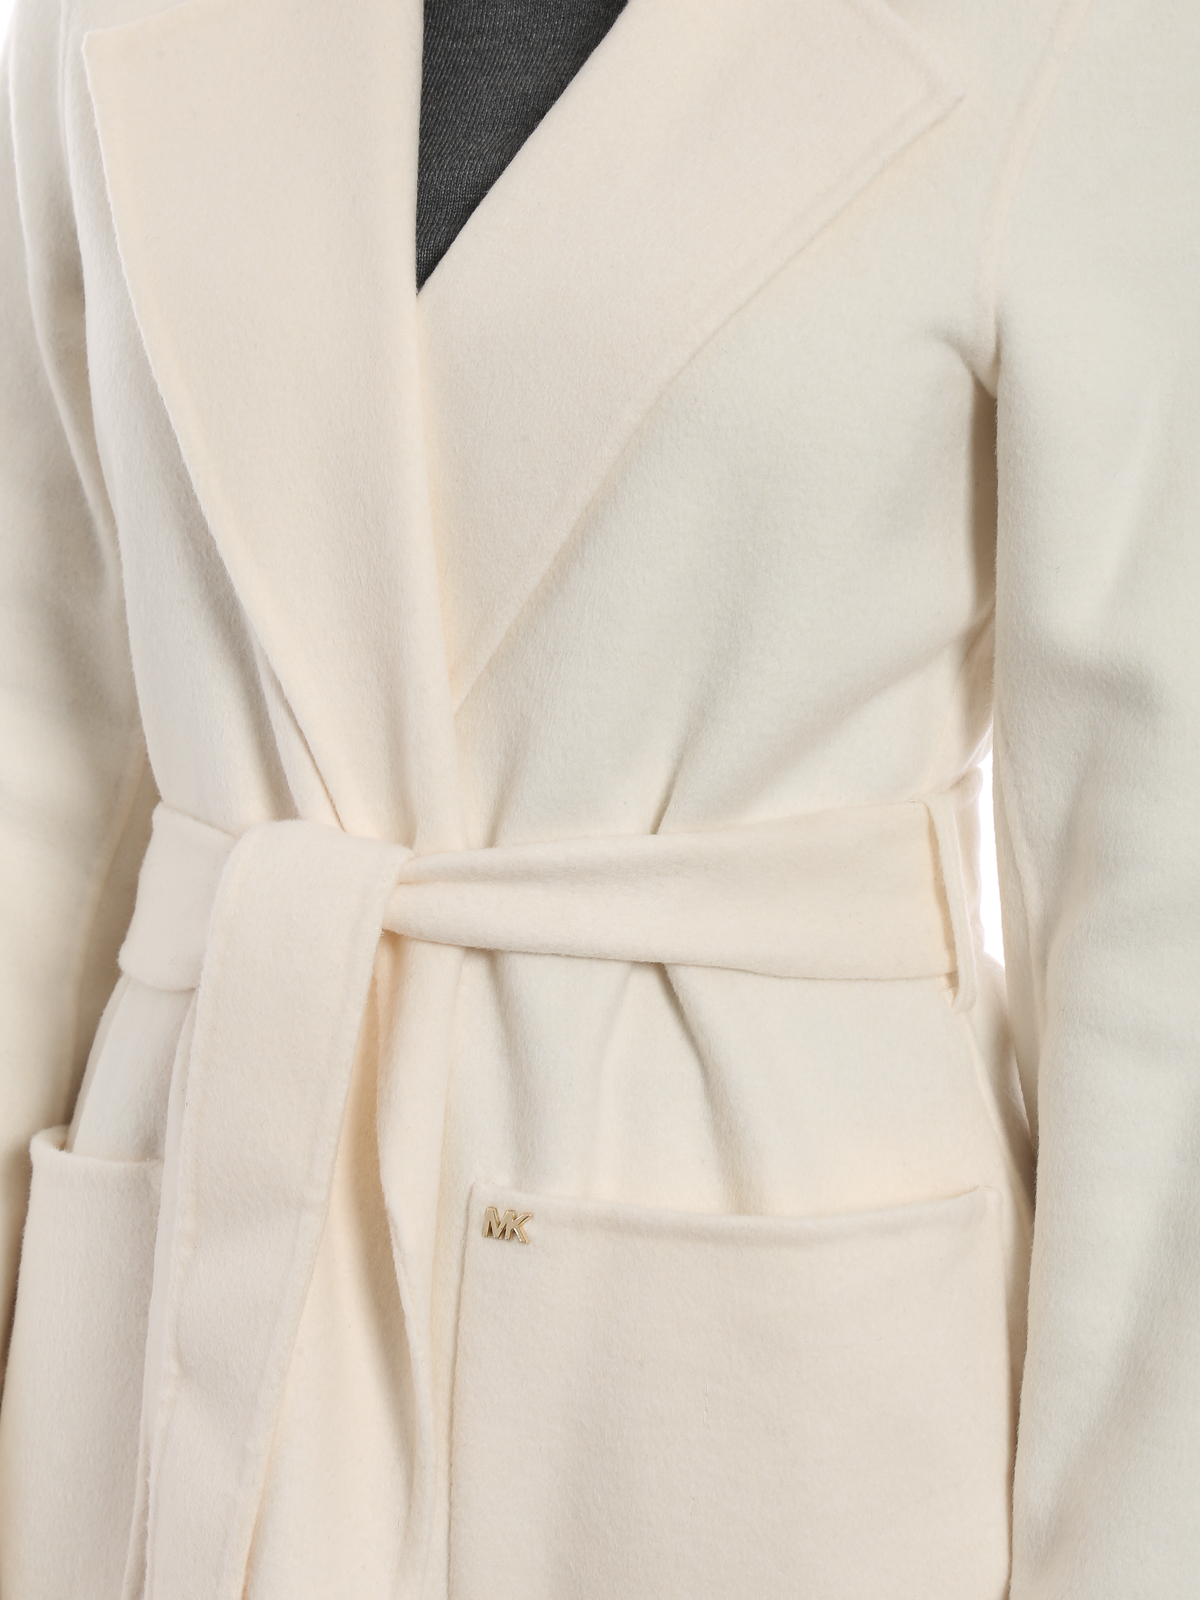 Knee length coats Michael Kors - Ivory wool blend wrap coat - 77G3857M22112